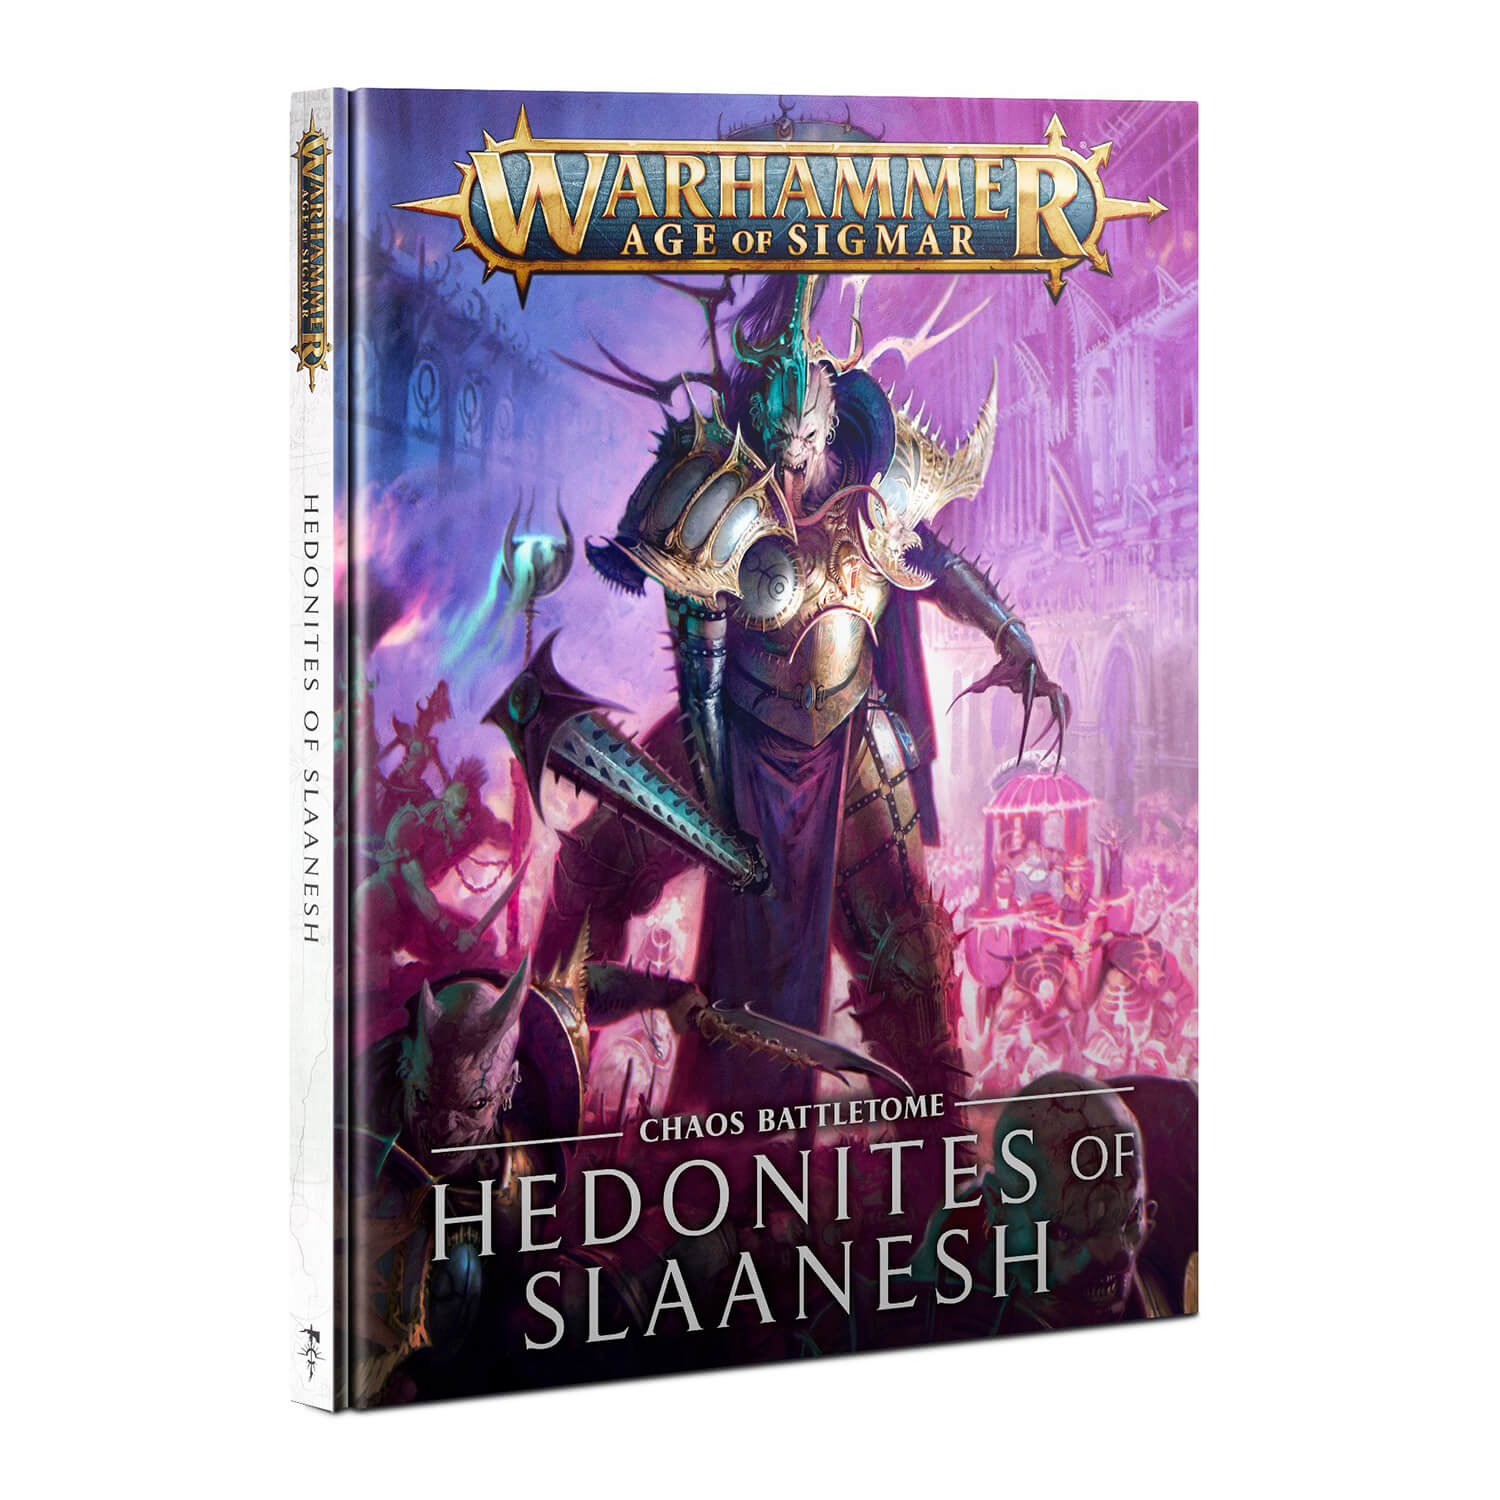 Warhammer Age of Sigmar Hedonites of Slaanesh Chaos Battletome